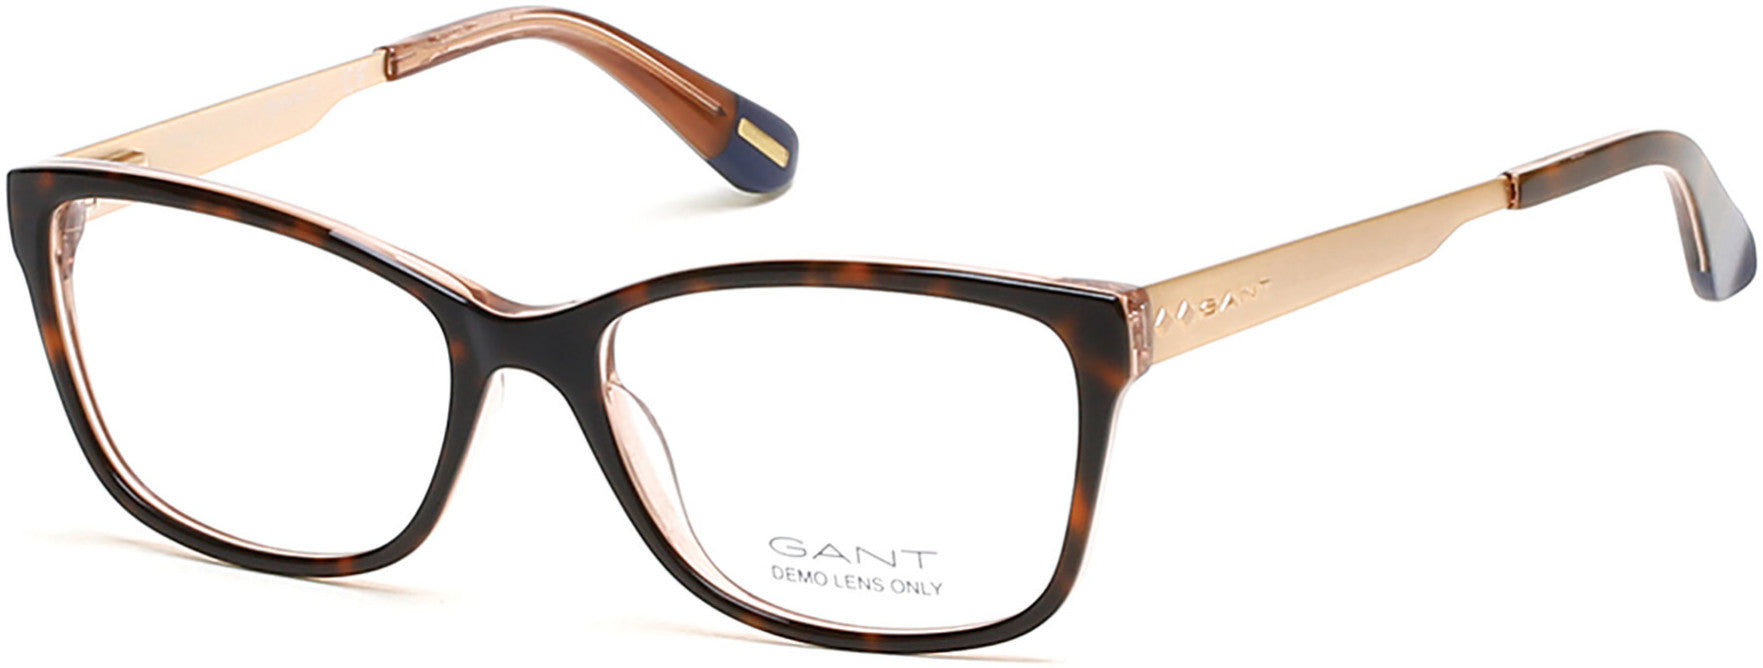 Gant GA4060 Square Eyeglasses 056-056 - Havana